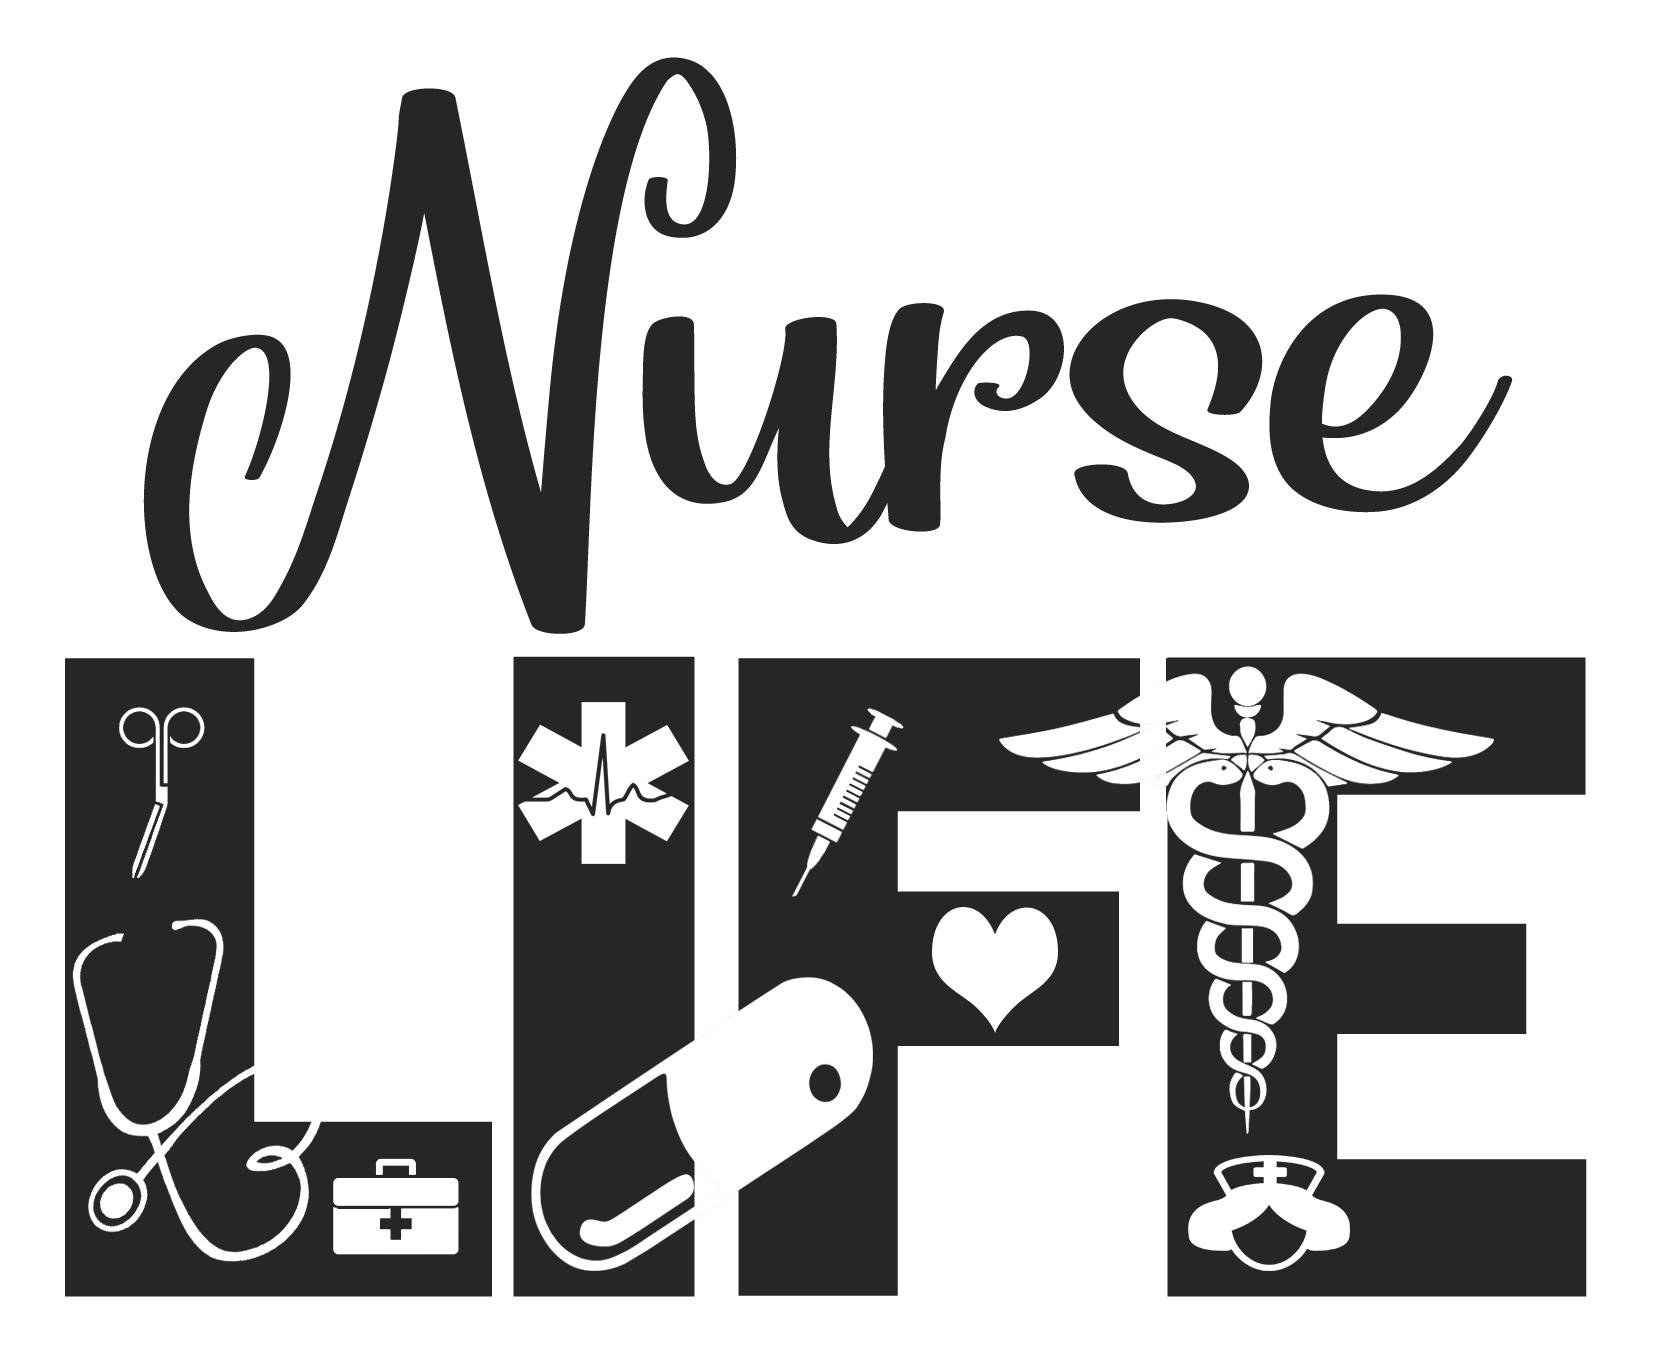 Free Nurse LIFE SVG File - The Crafty Crafter Club